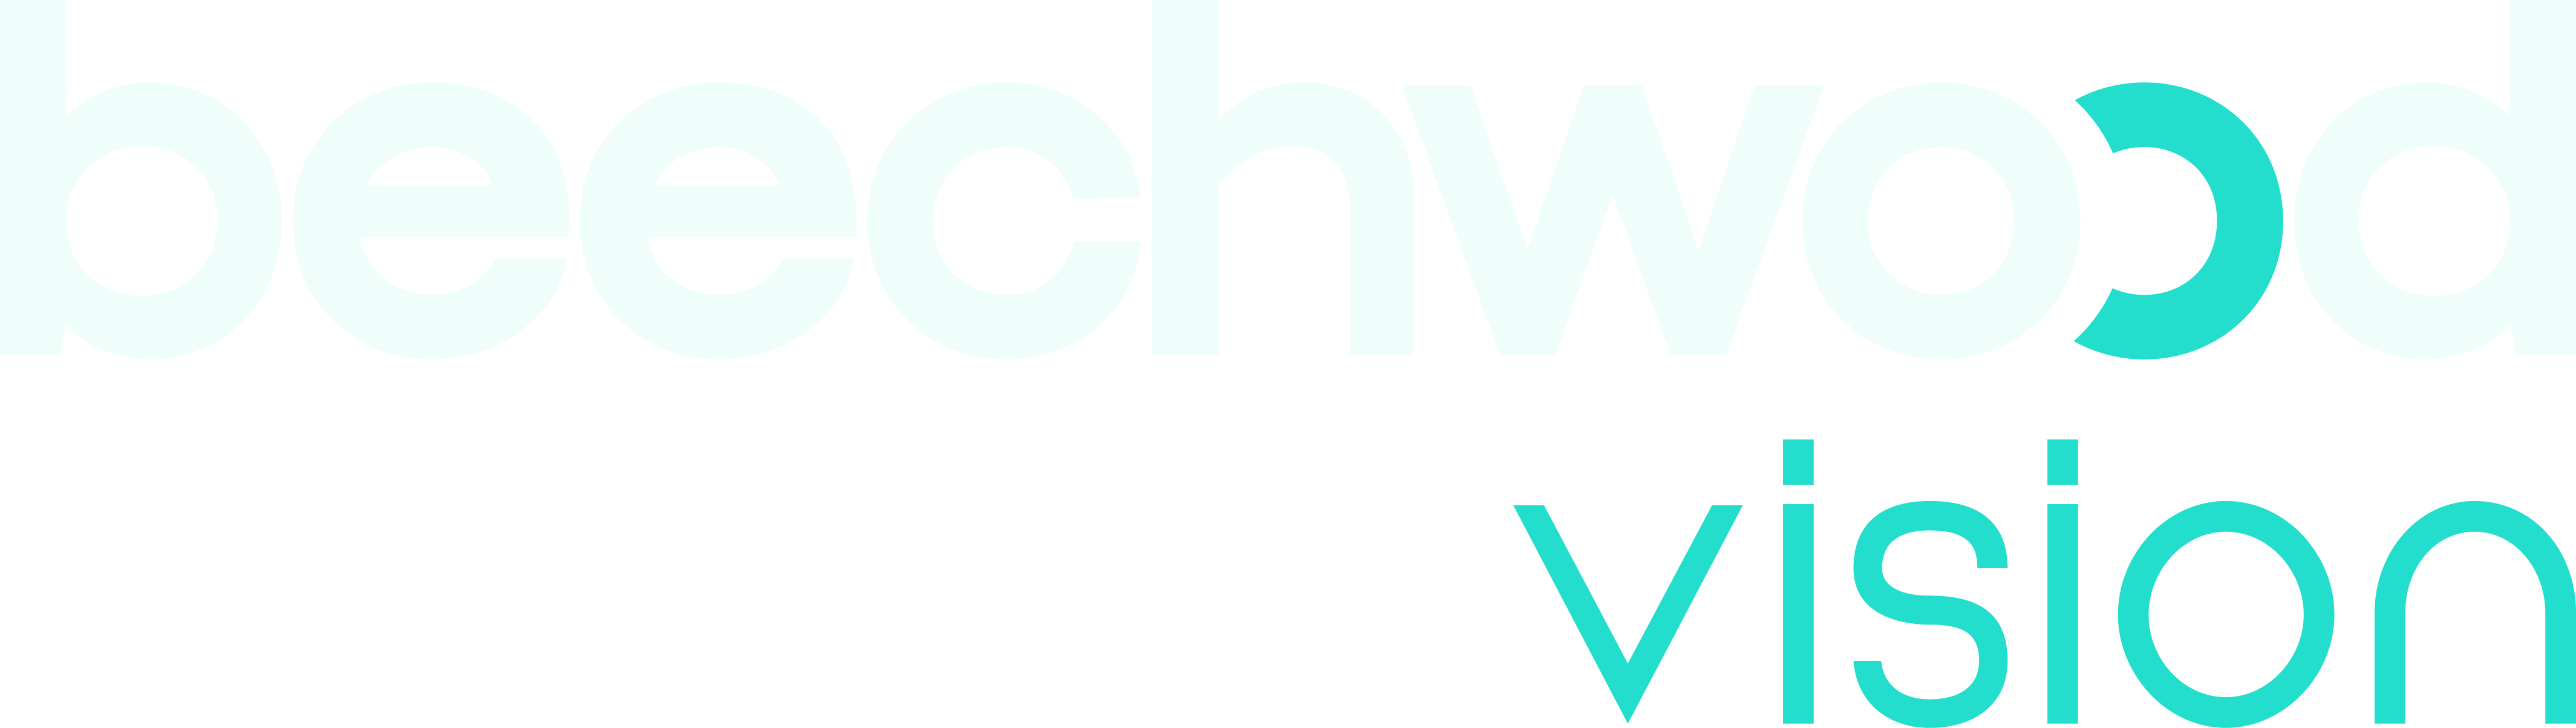 beechwood vision Logo